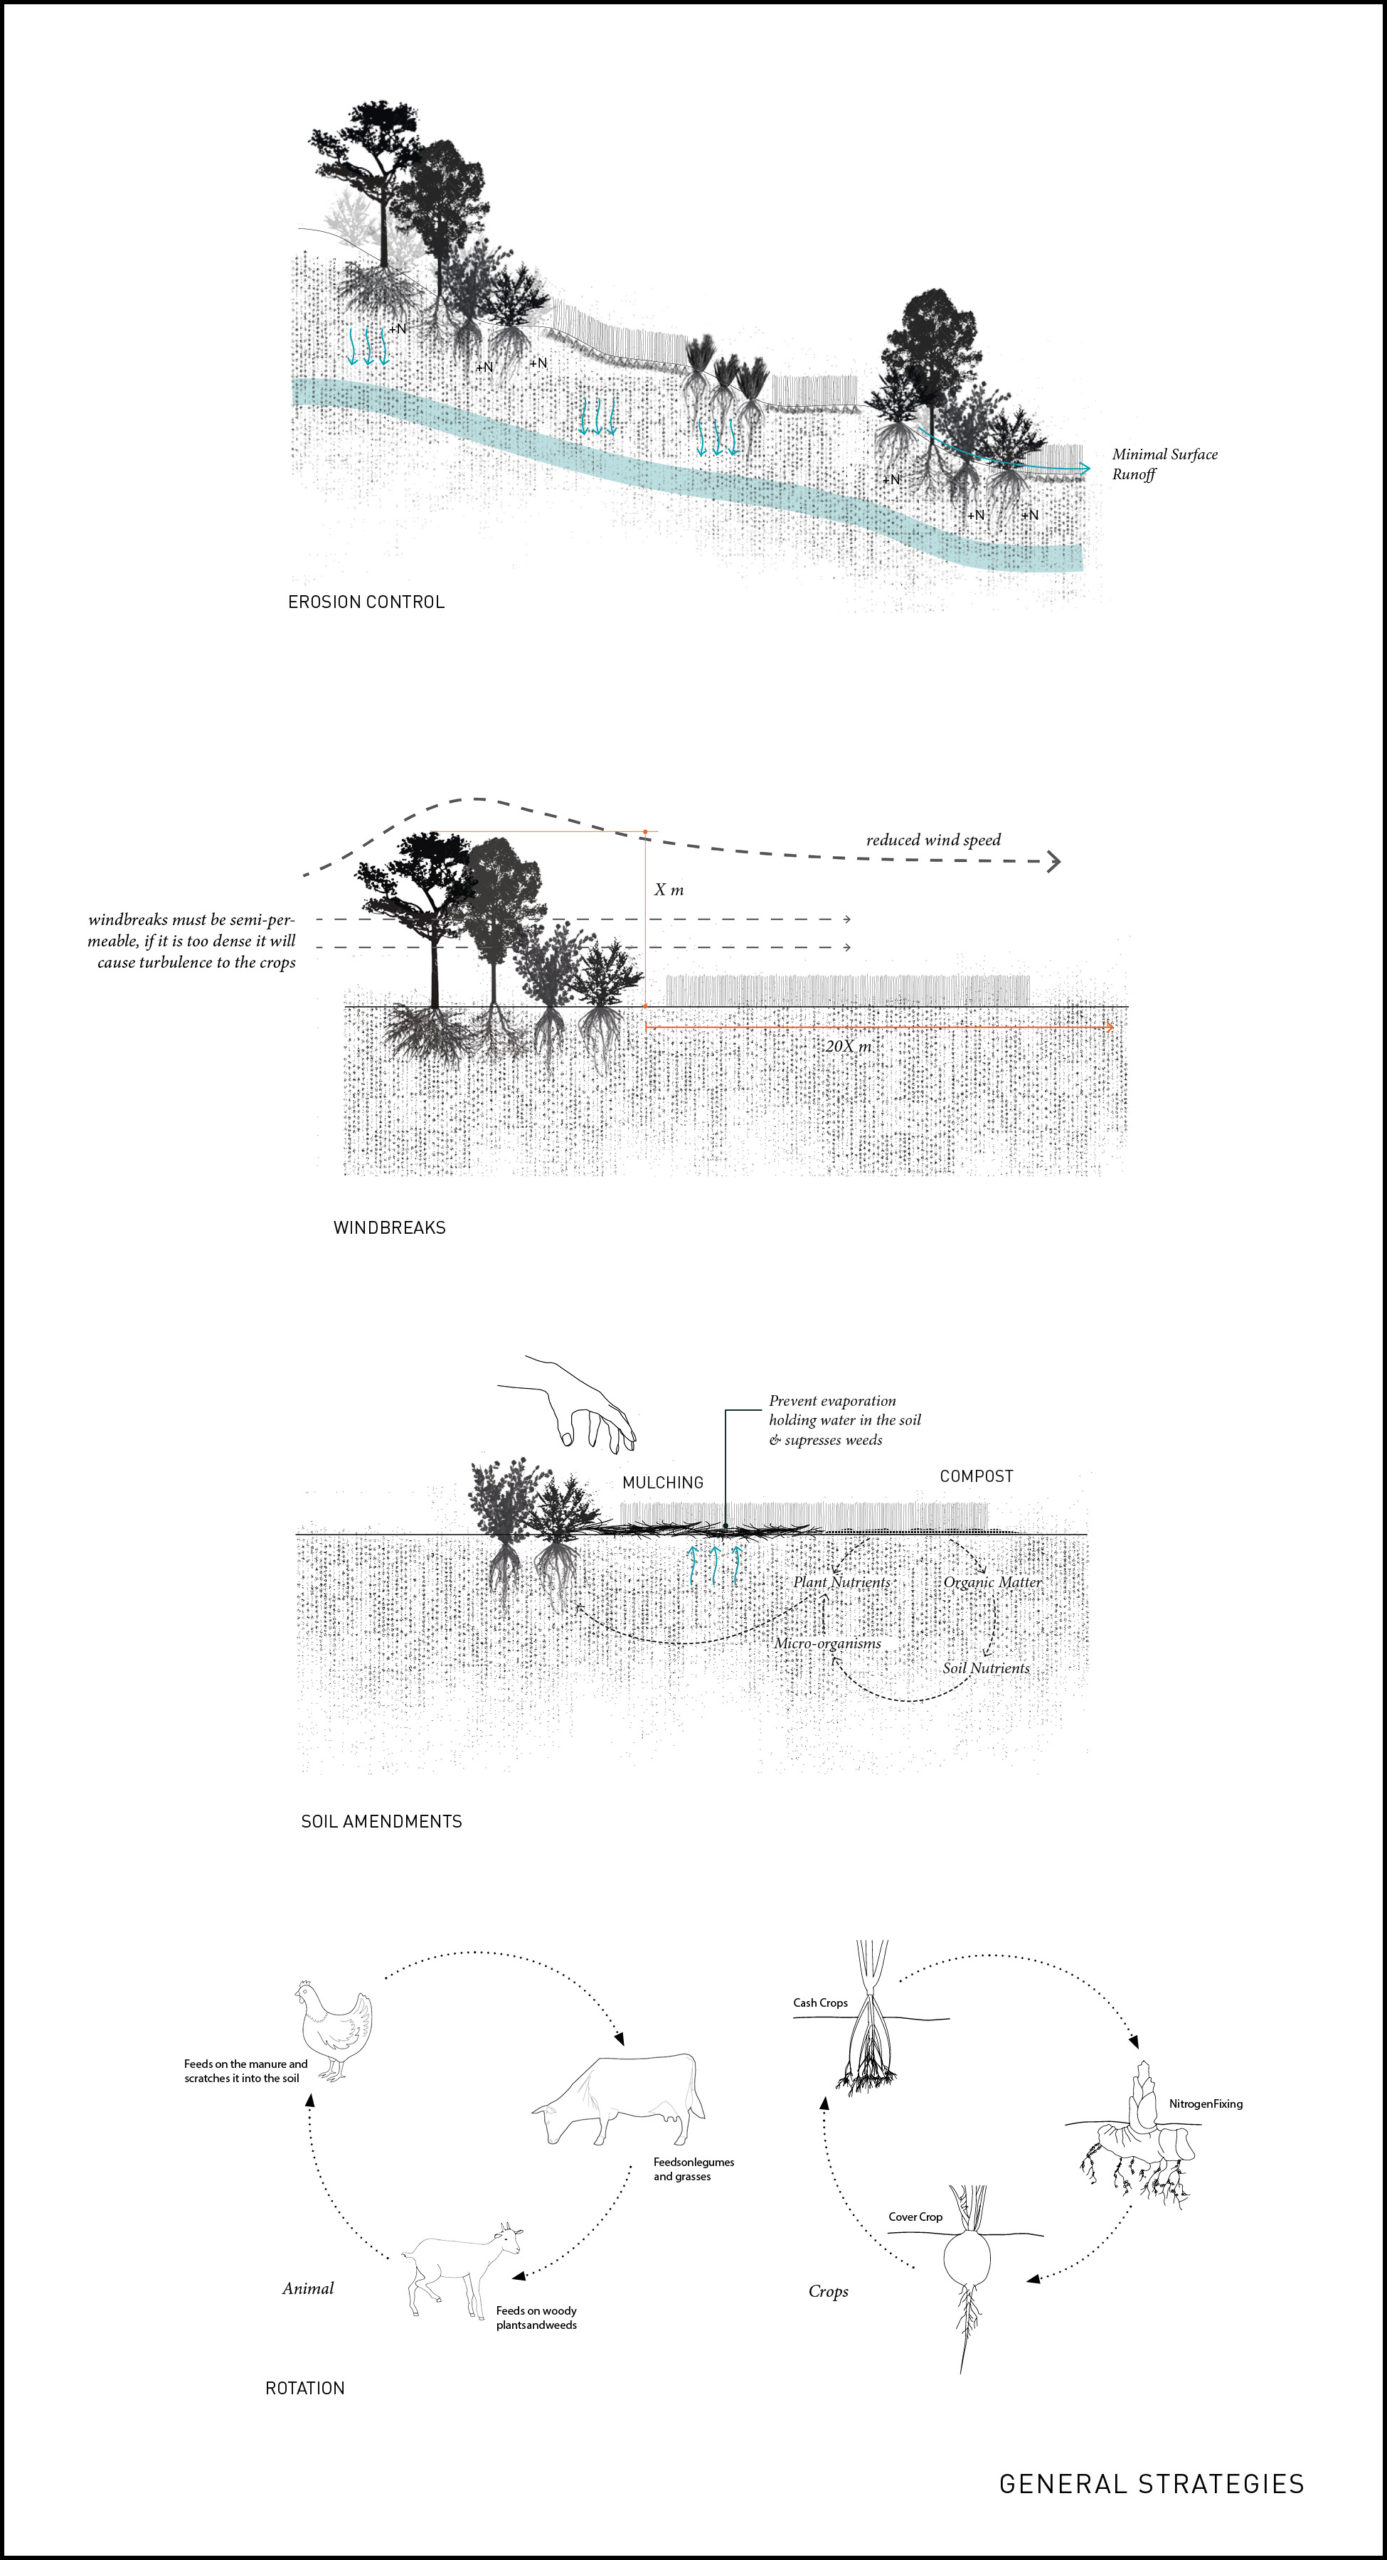 diagrams showing erosion, windbreaks, soil amendments, and rotation